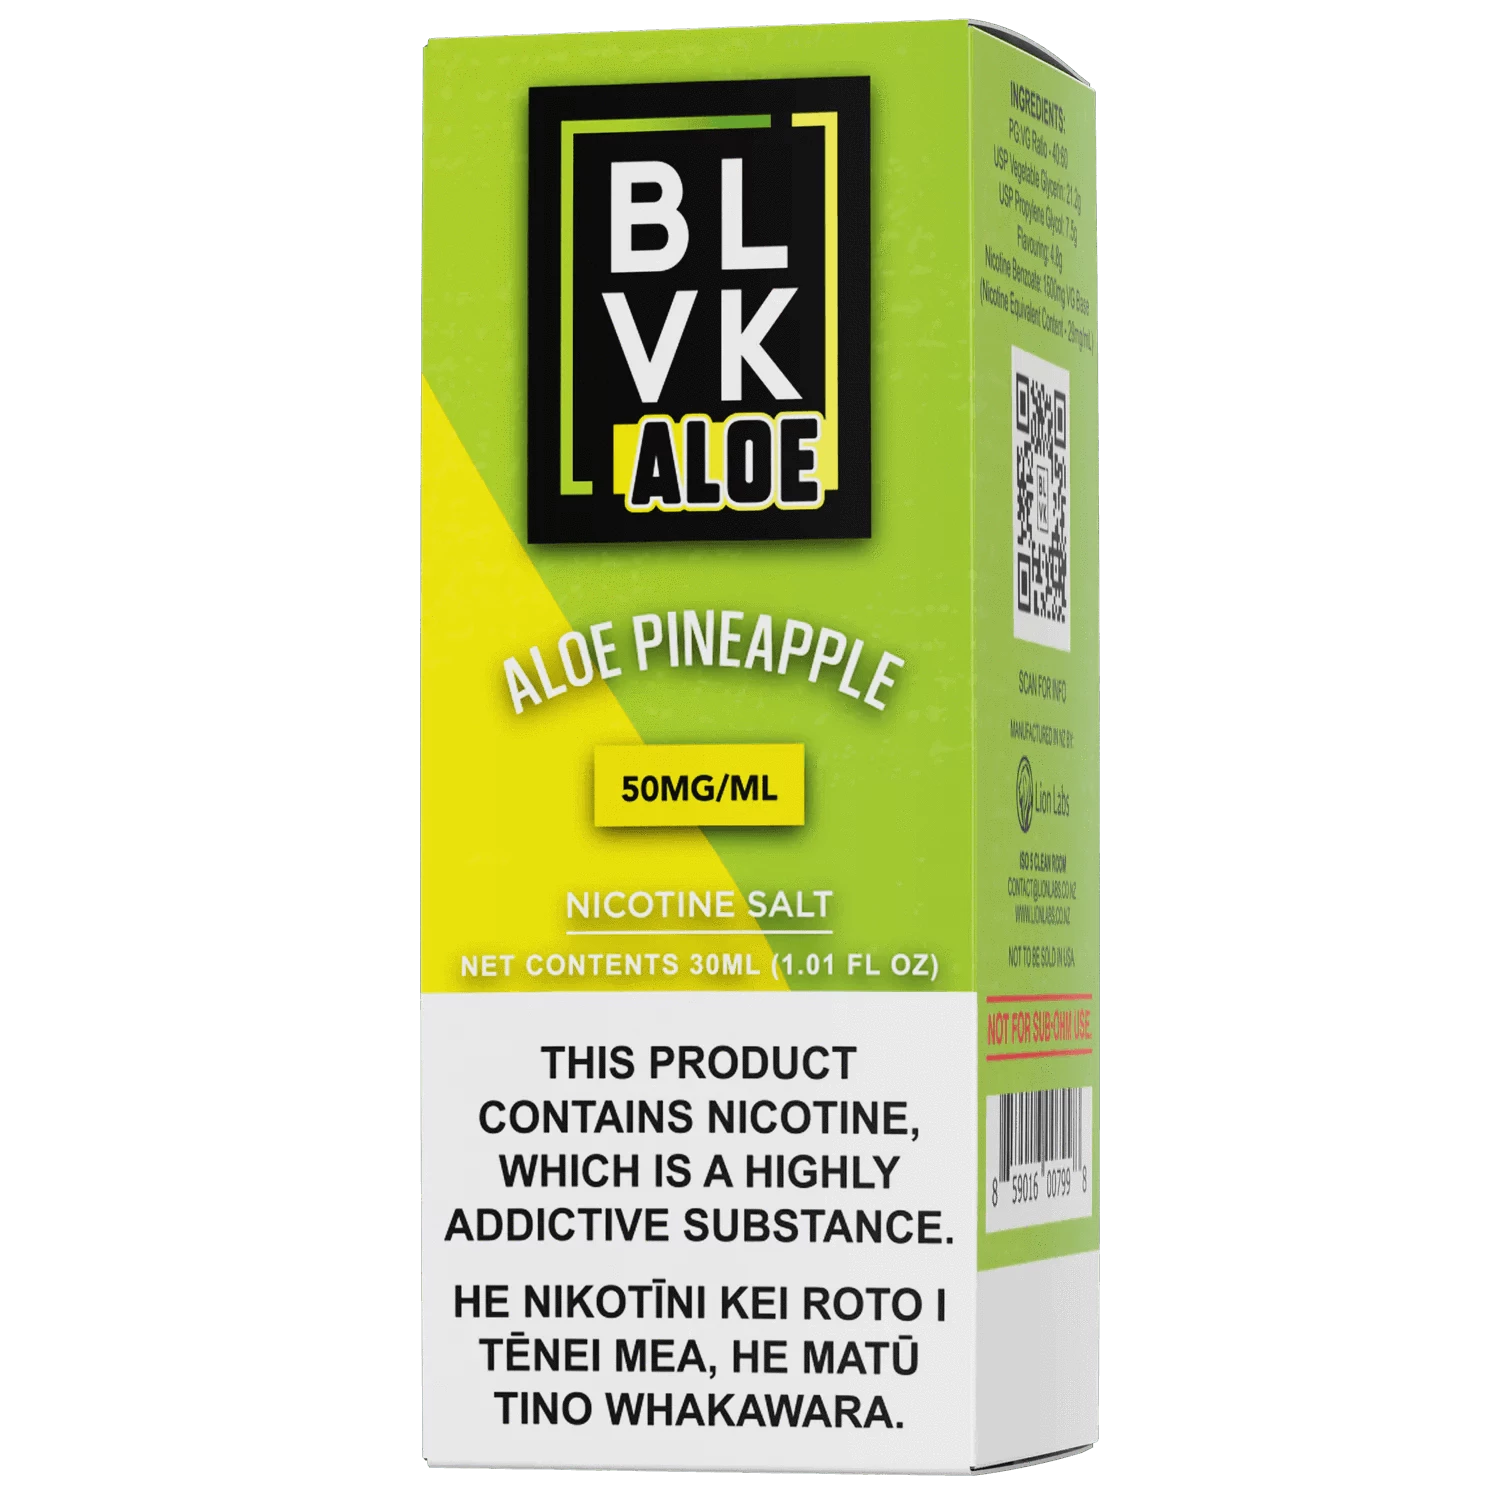 BLVK ALOE - Aloe Pineapple - Vape Vend